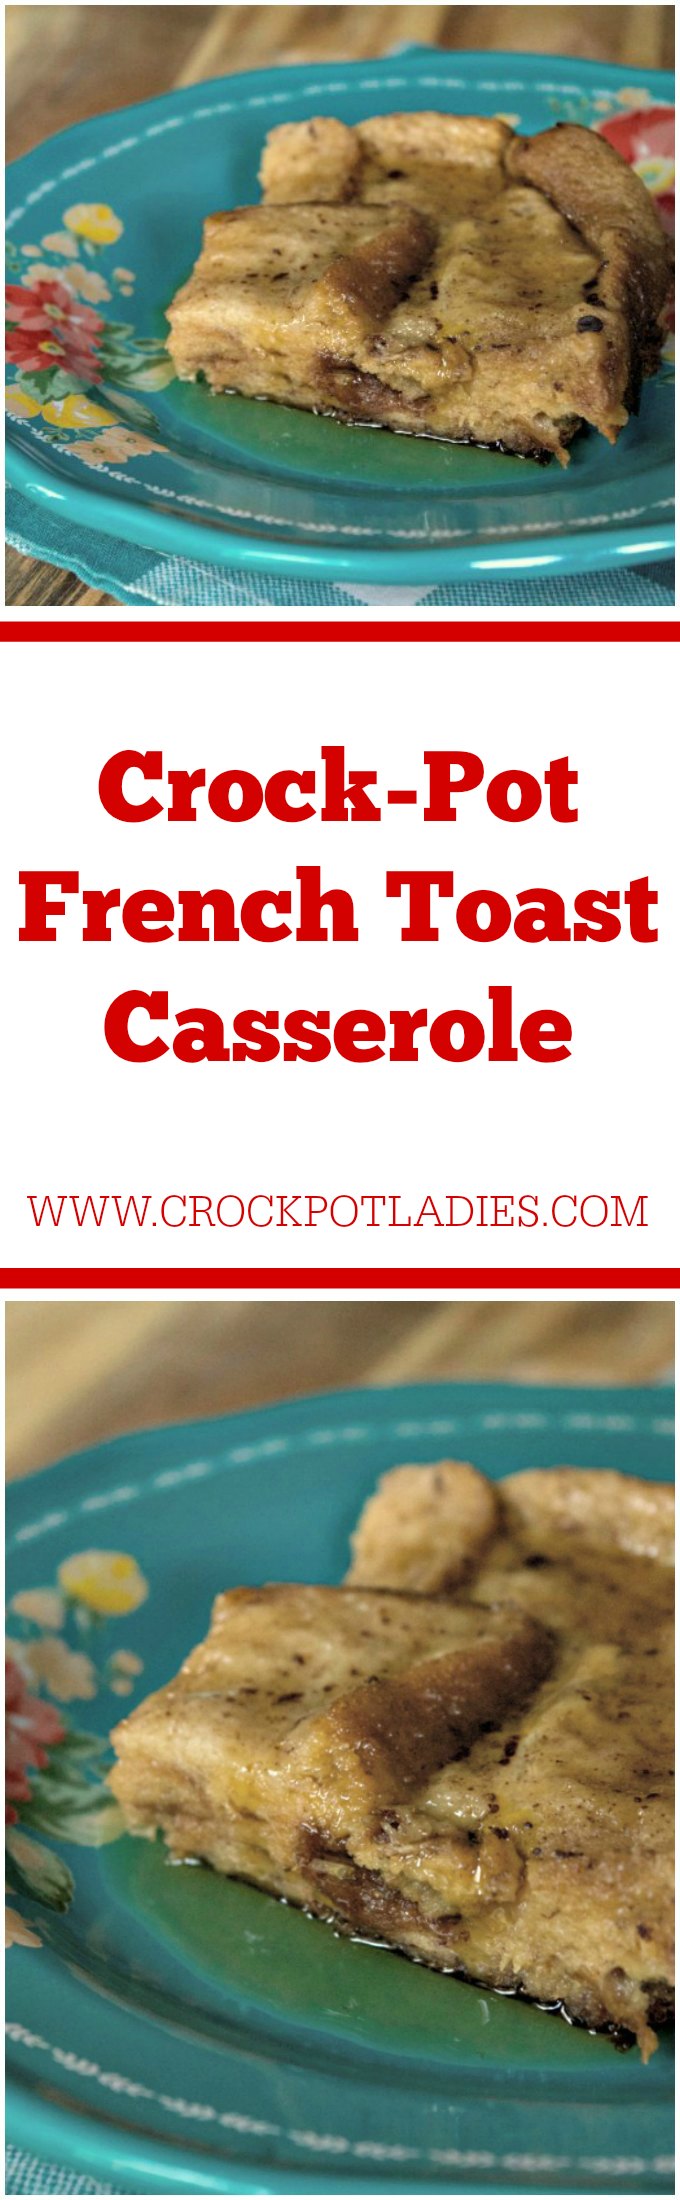 Crock-Pot French Toast Casserole